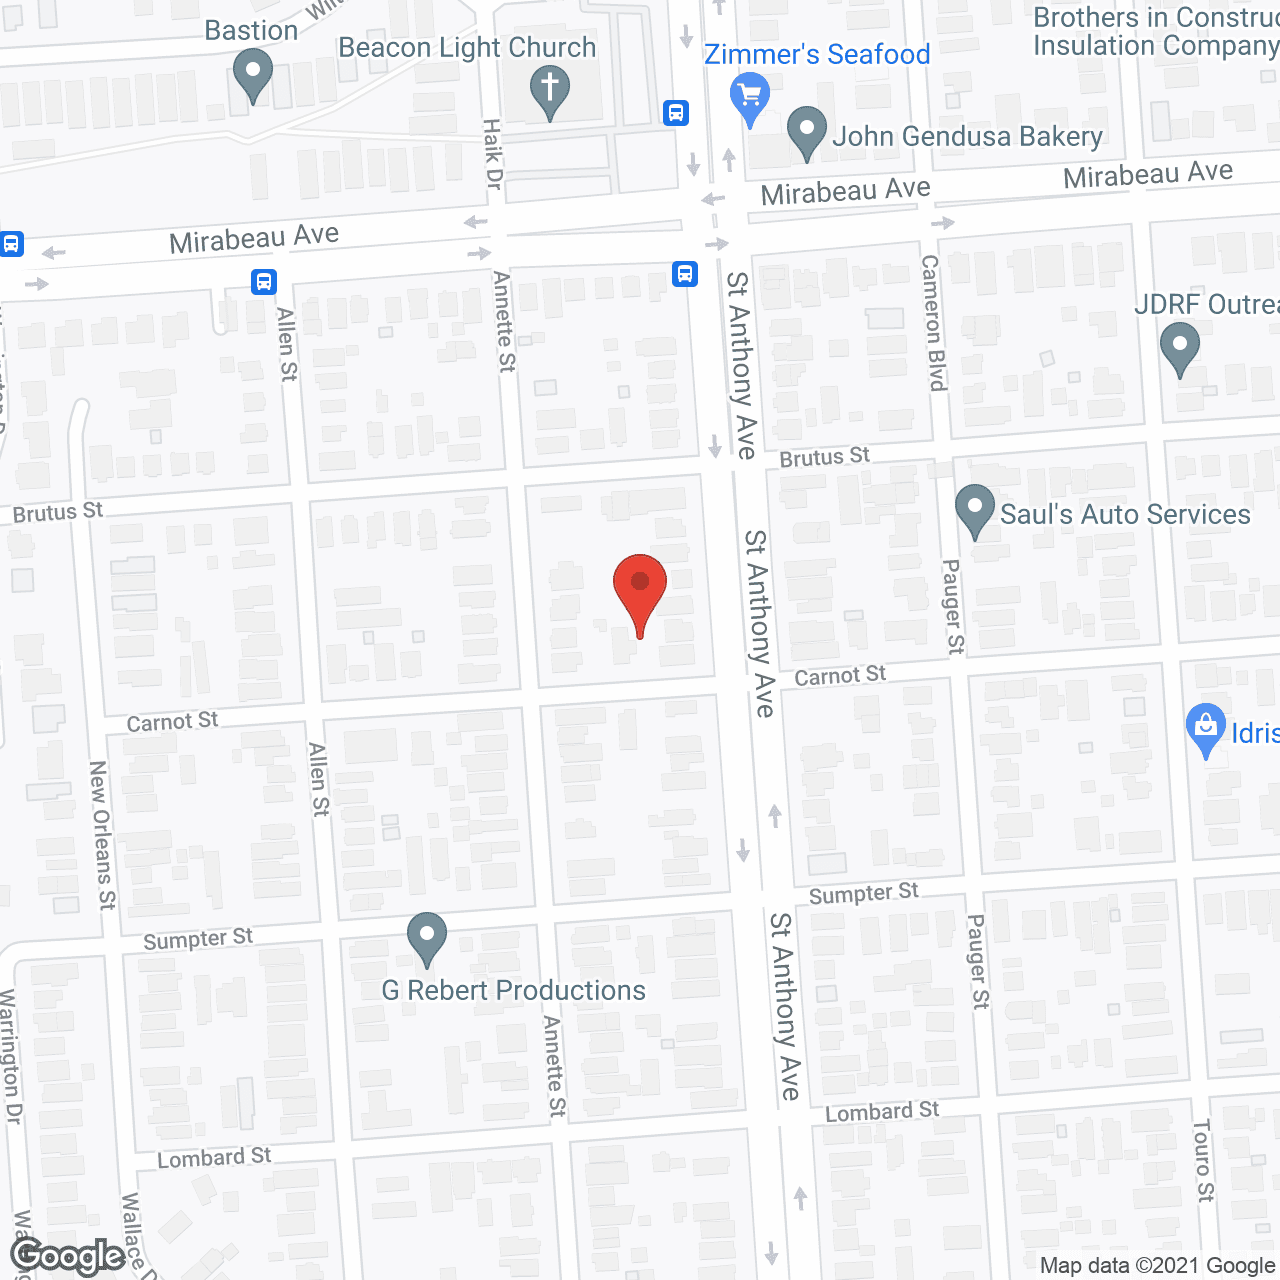 Alton Home Care Services - New Orleans, LA in google map